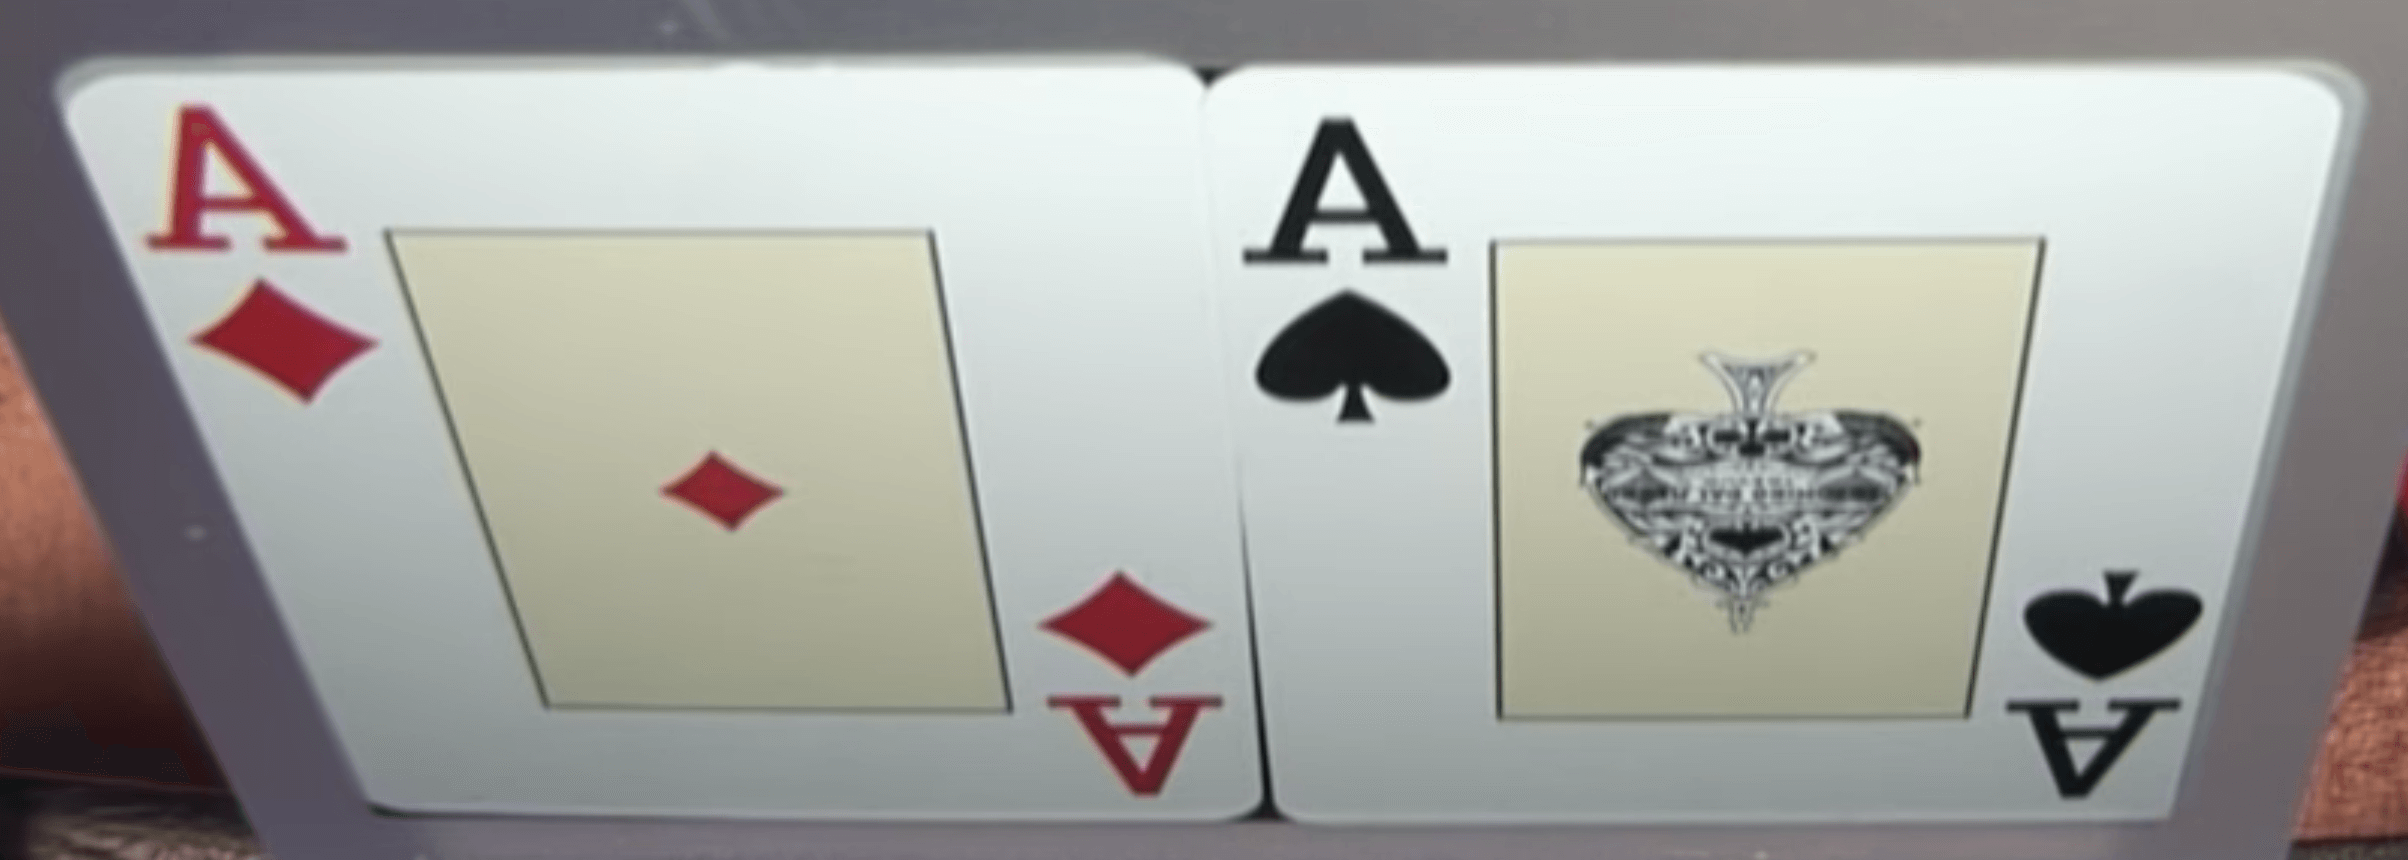 Poker Pocket Aces